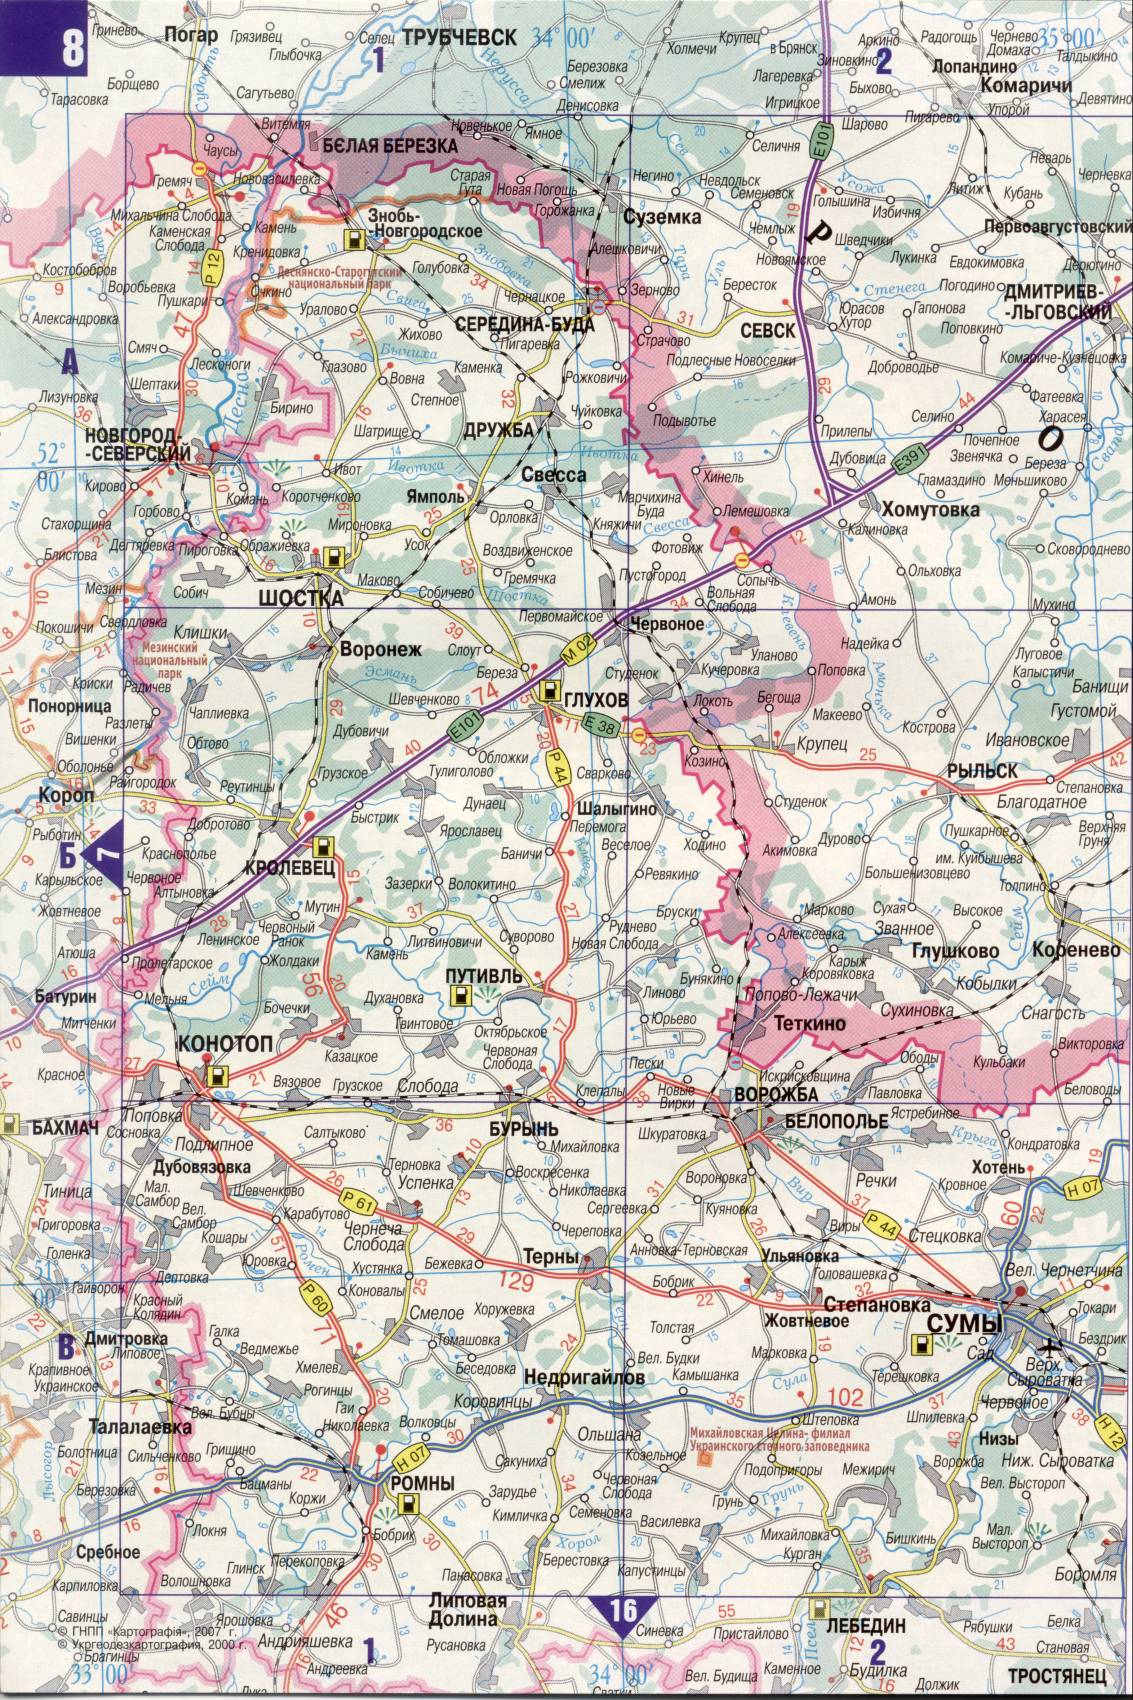 Map of Ukraine. Detailed road map of Ukraine avtomobilnog satin. download free, G0